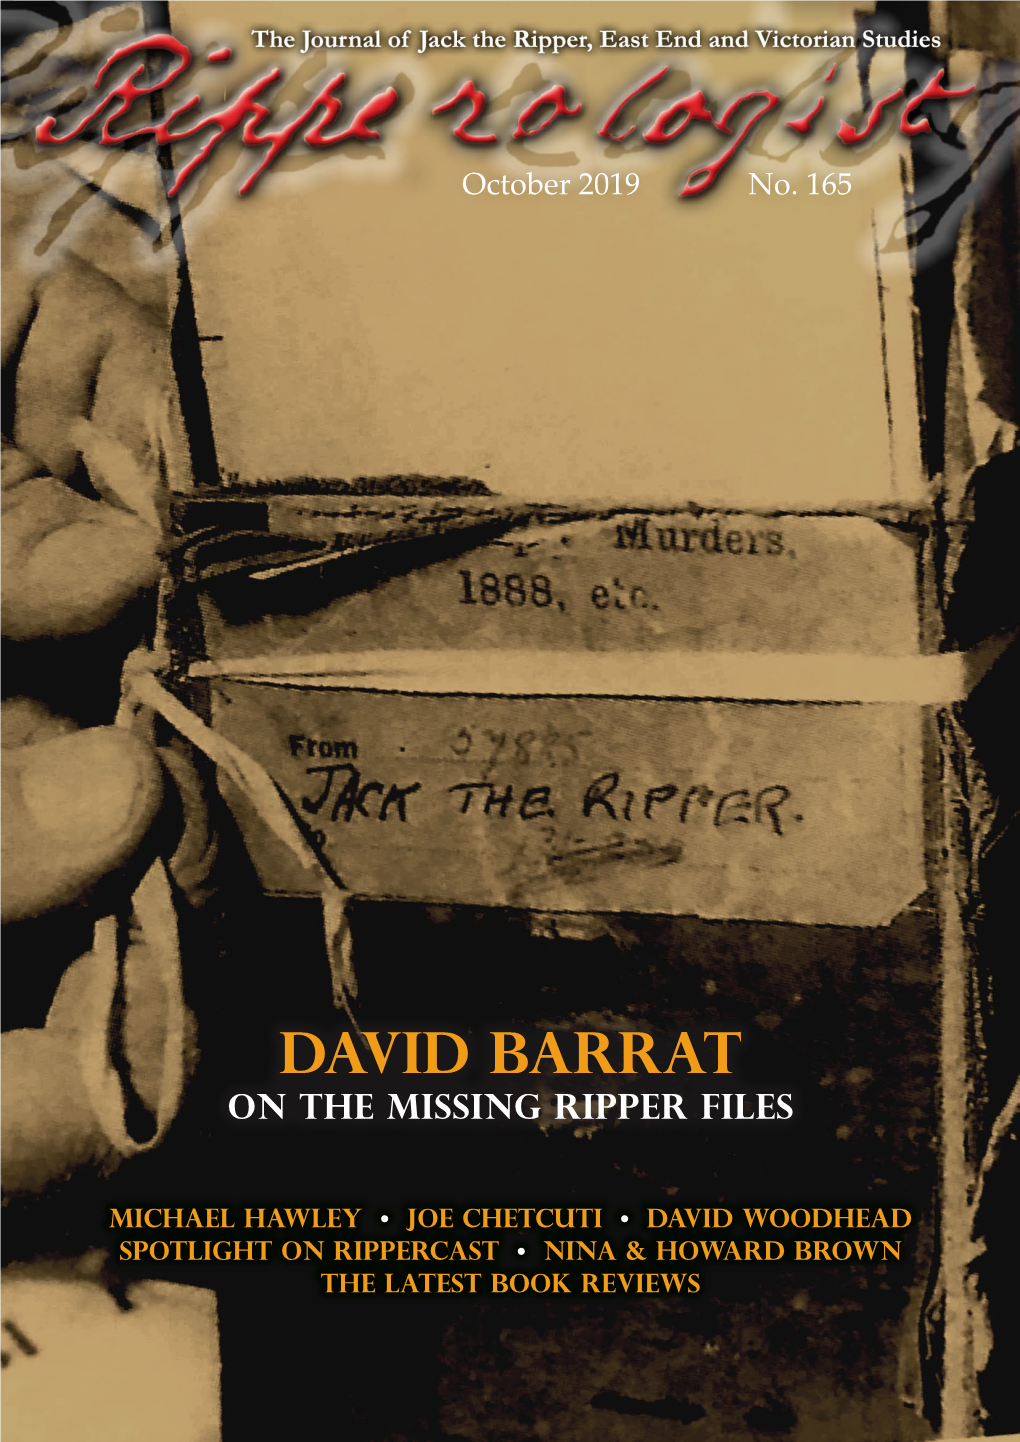 DAVID BARRAT on the Missing Ripper Files